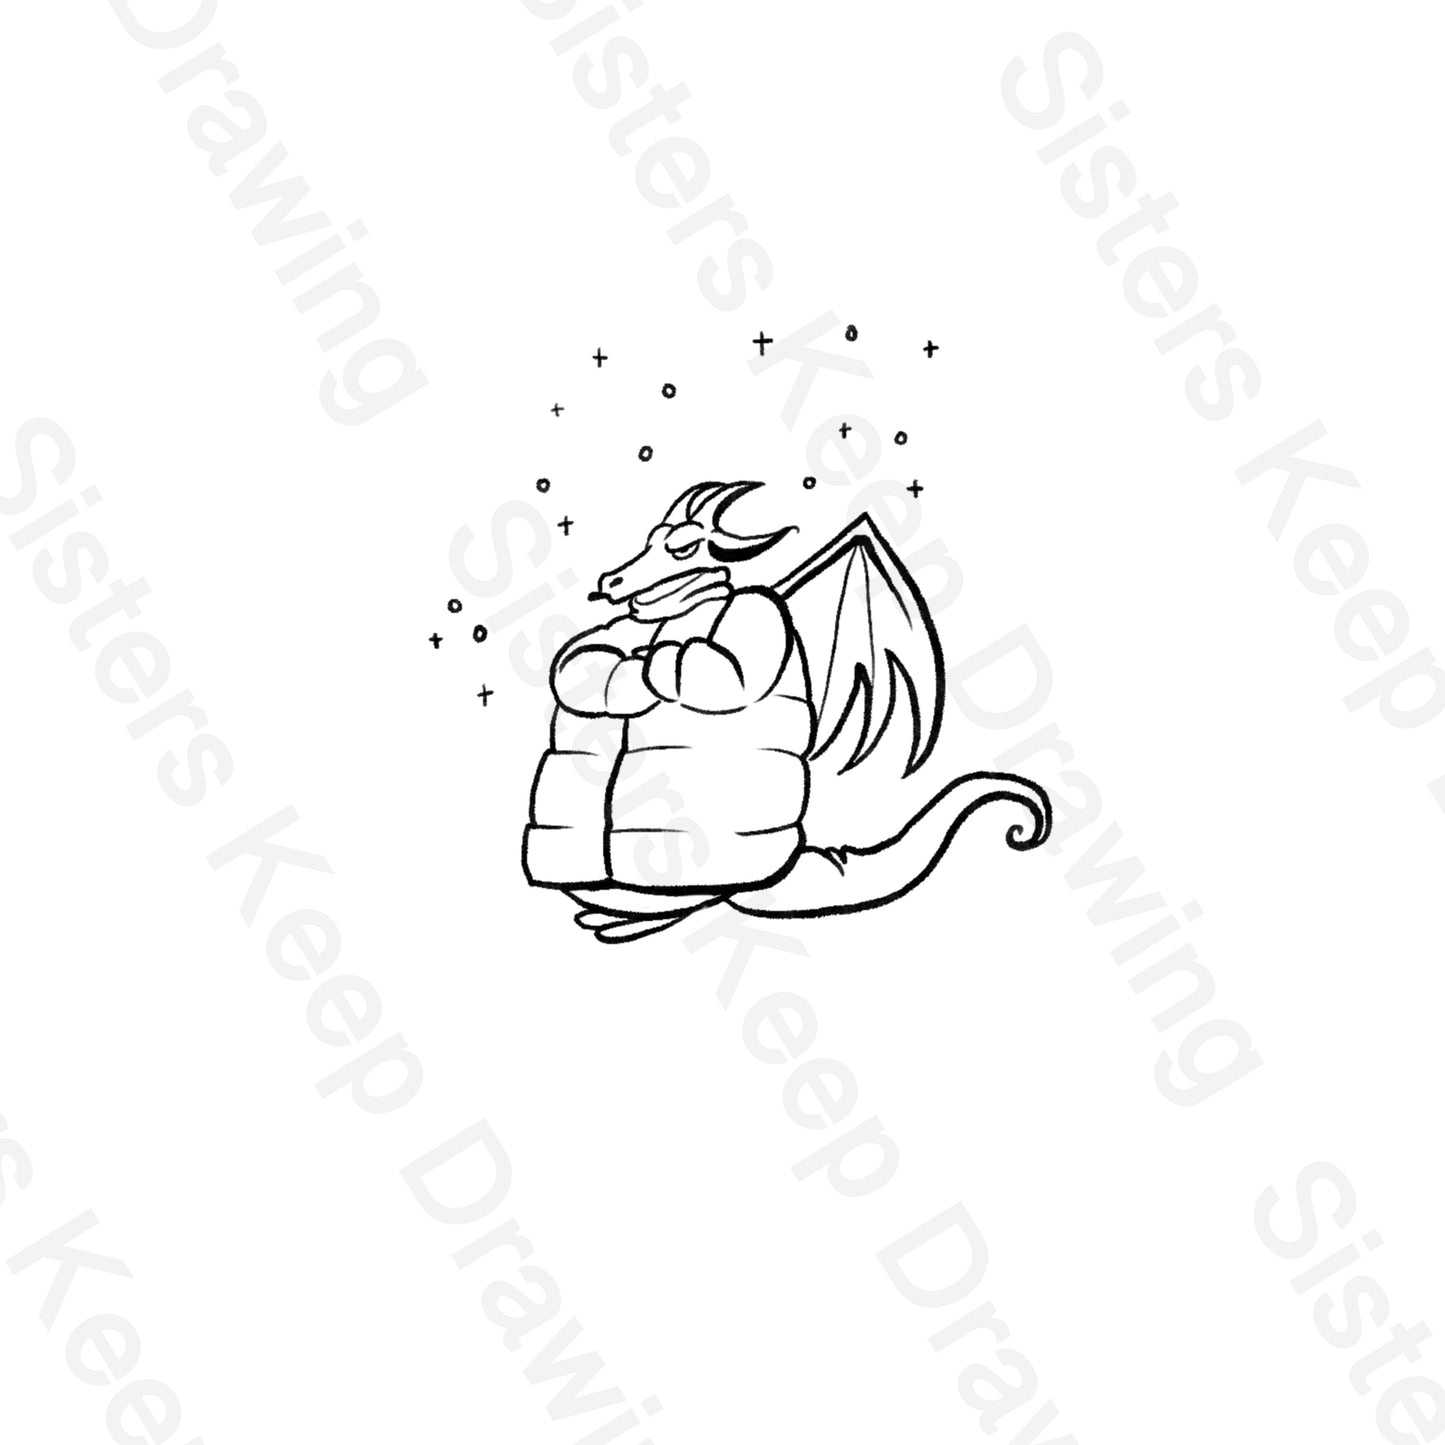 Tiny Dragon freezing in big coat-Tattoo Transparent Permission PNG- instant download digital printable artw